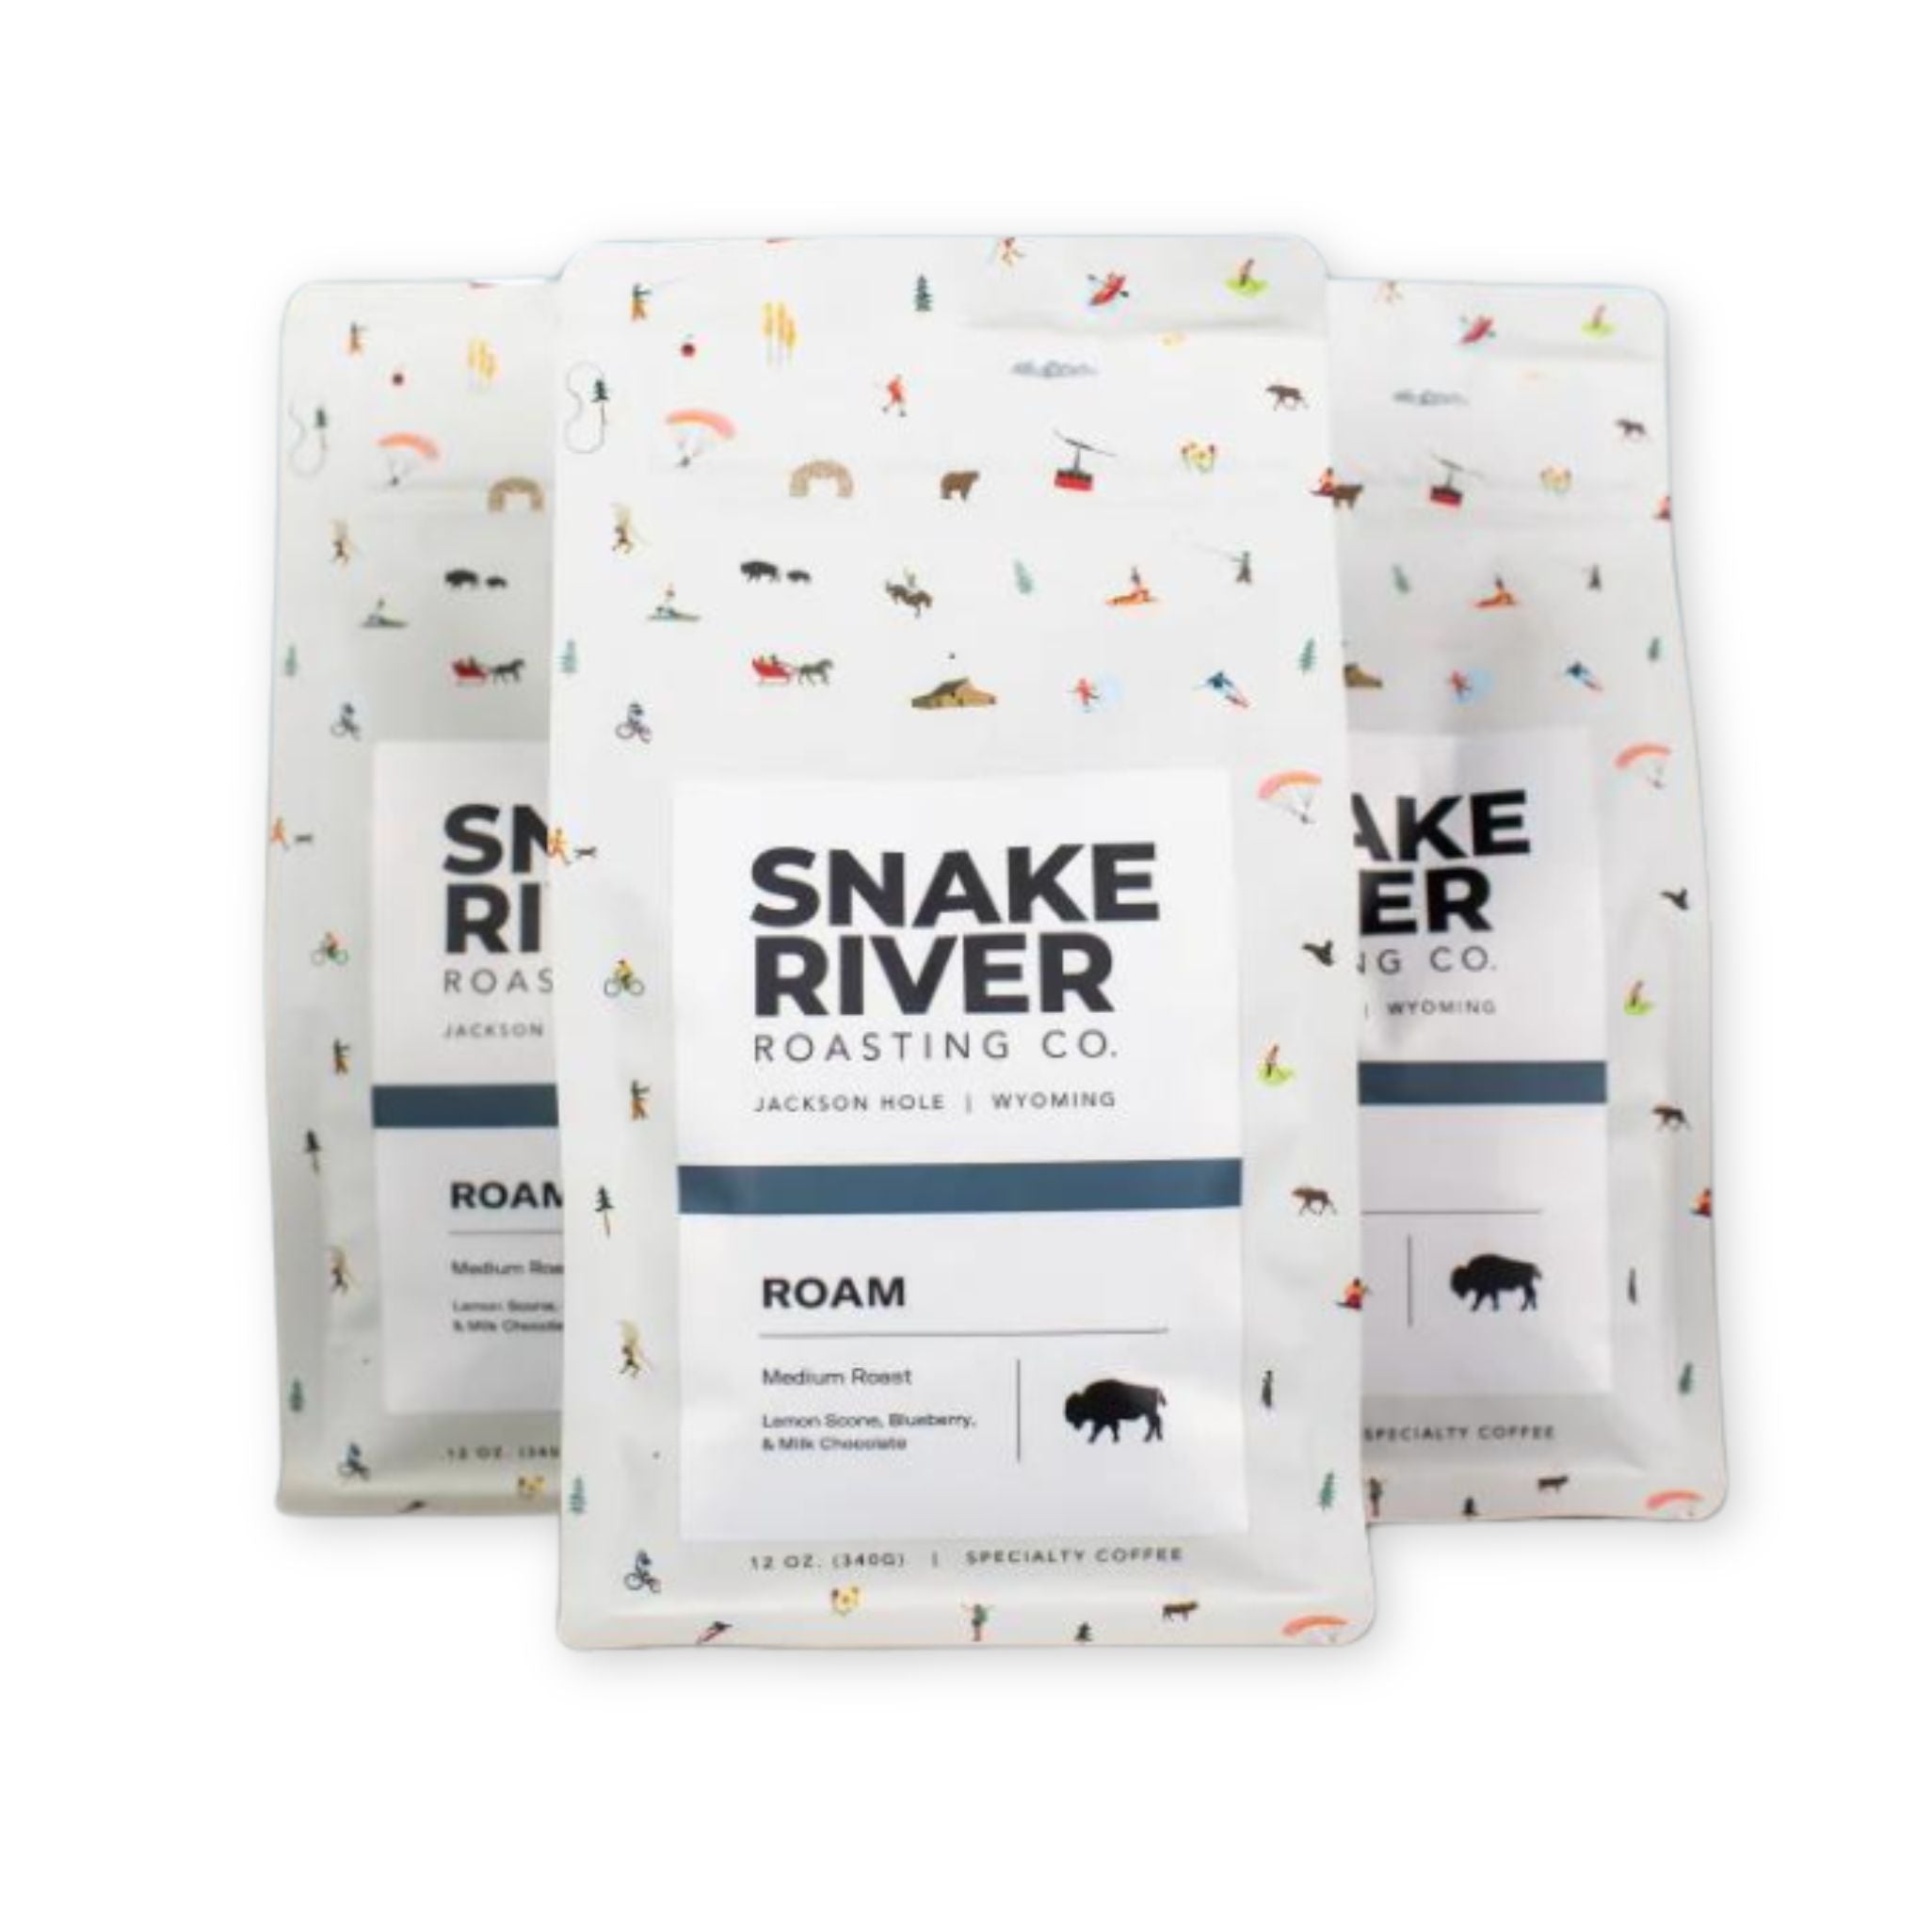 Three Coffee Bags for Snake River Roasting Roam Blend